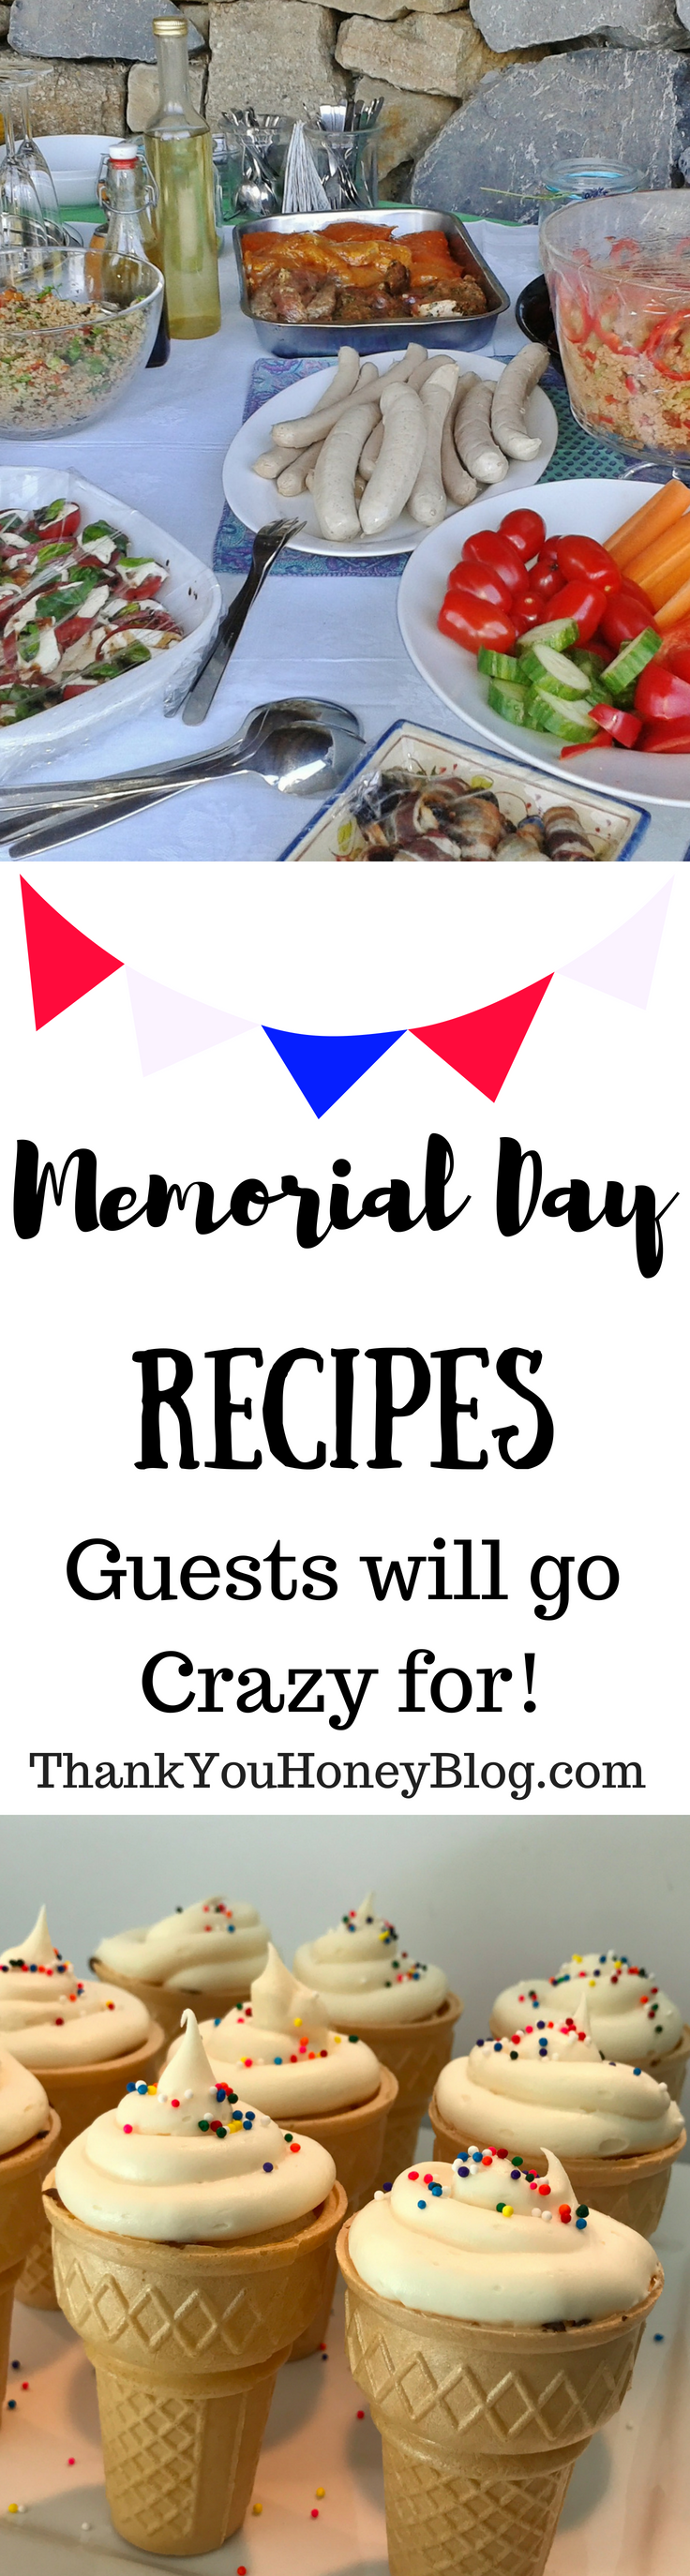 Memorial Day BBQ Recipes